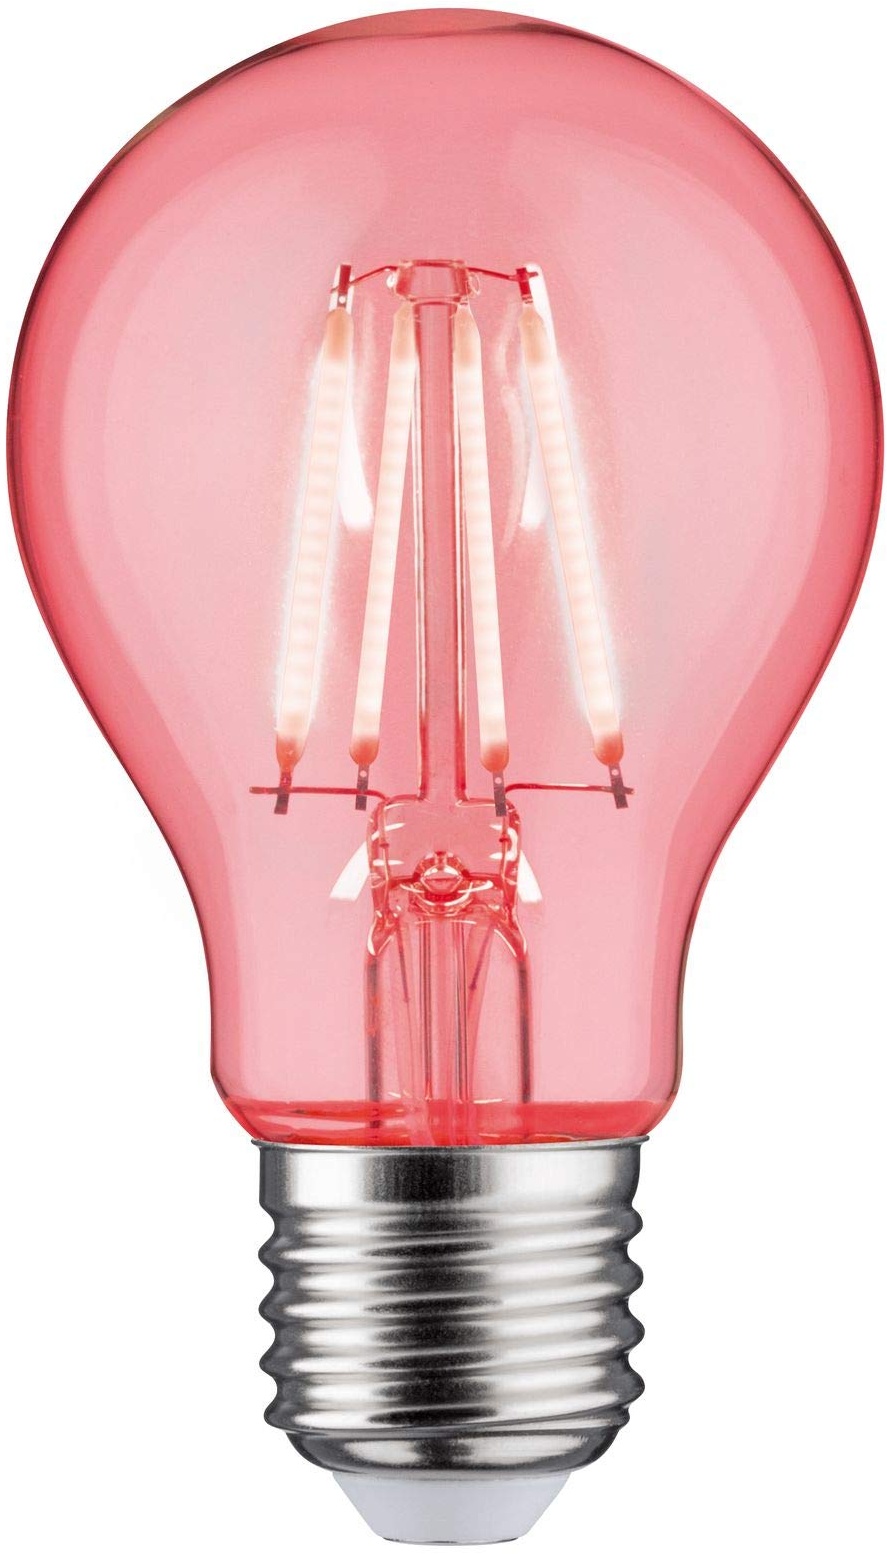 Paulmann 28723 LED Lampe Standardform 1,3W Leuchtmittel Rot Beleuchtung Glas Licht 1000K E27